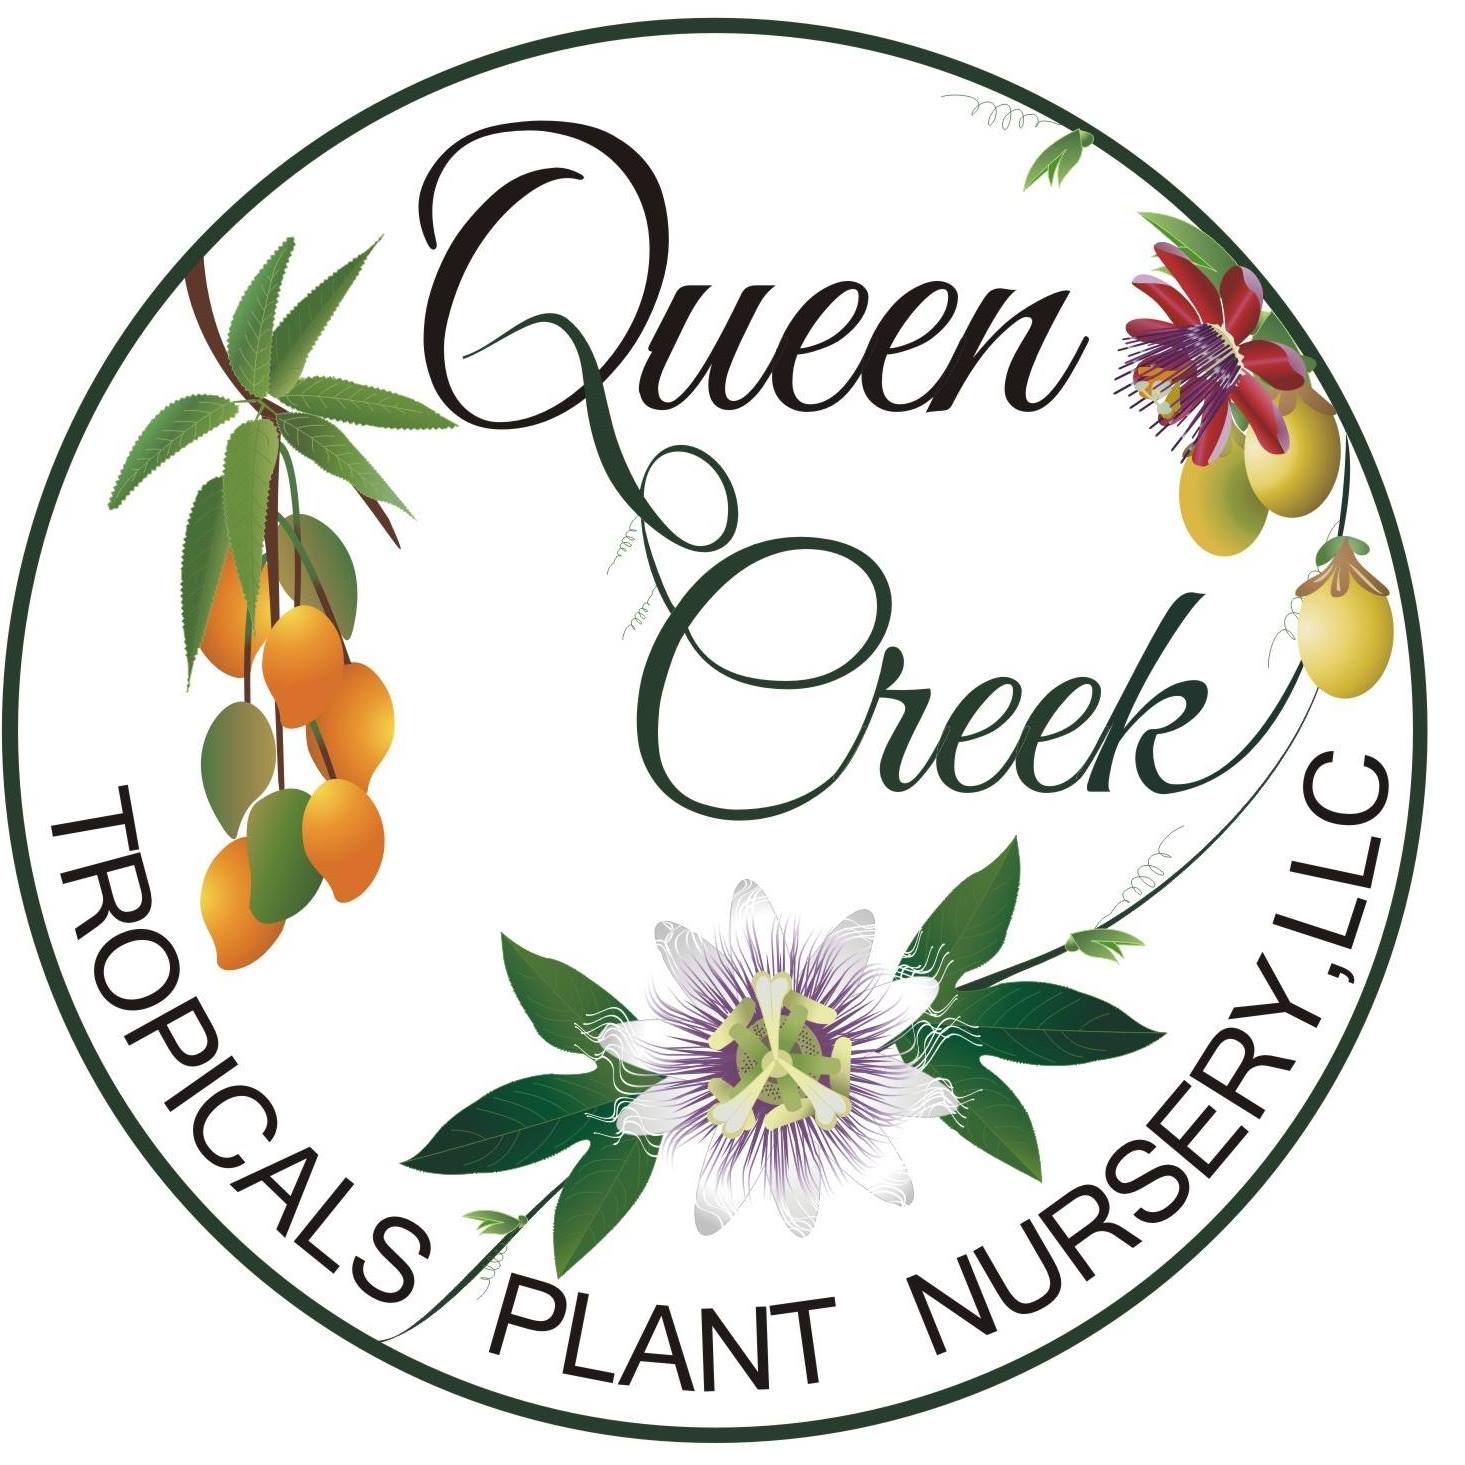 Company logo of Queen Creek Tropicals Plant Nursery, LLC